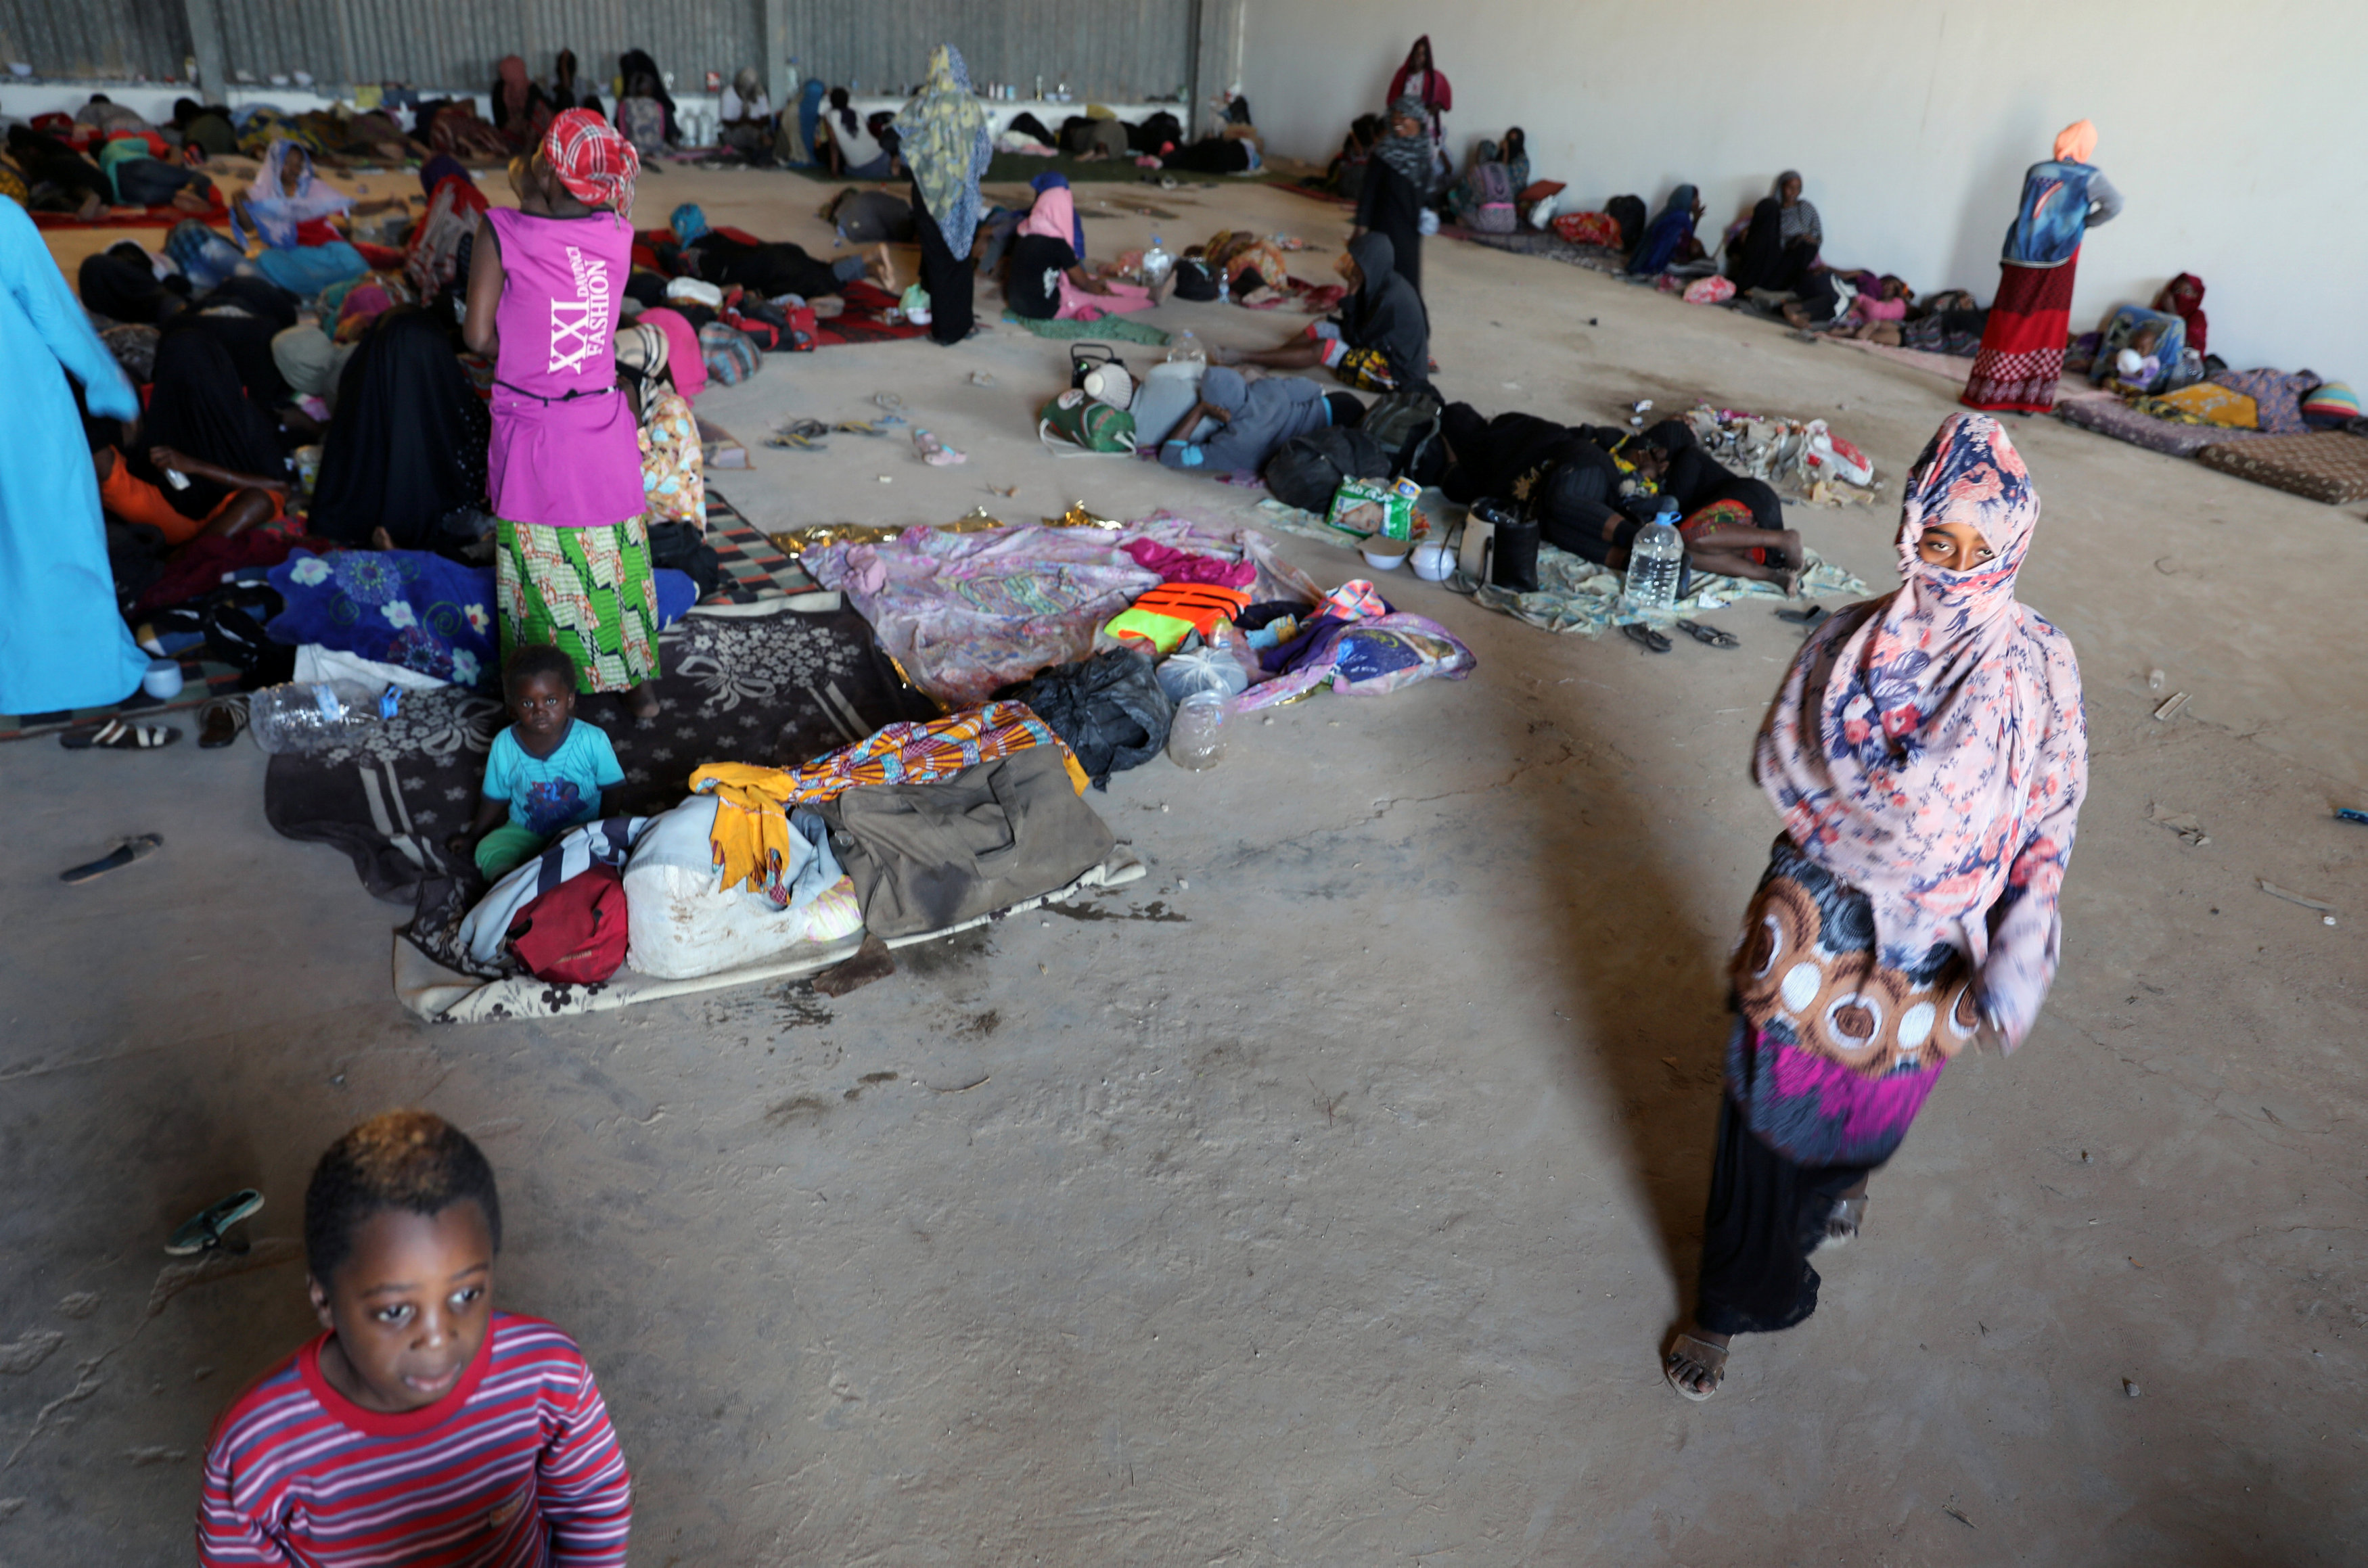 مكان احتجاز مهاجرين غير شرعيين فى ليبيا